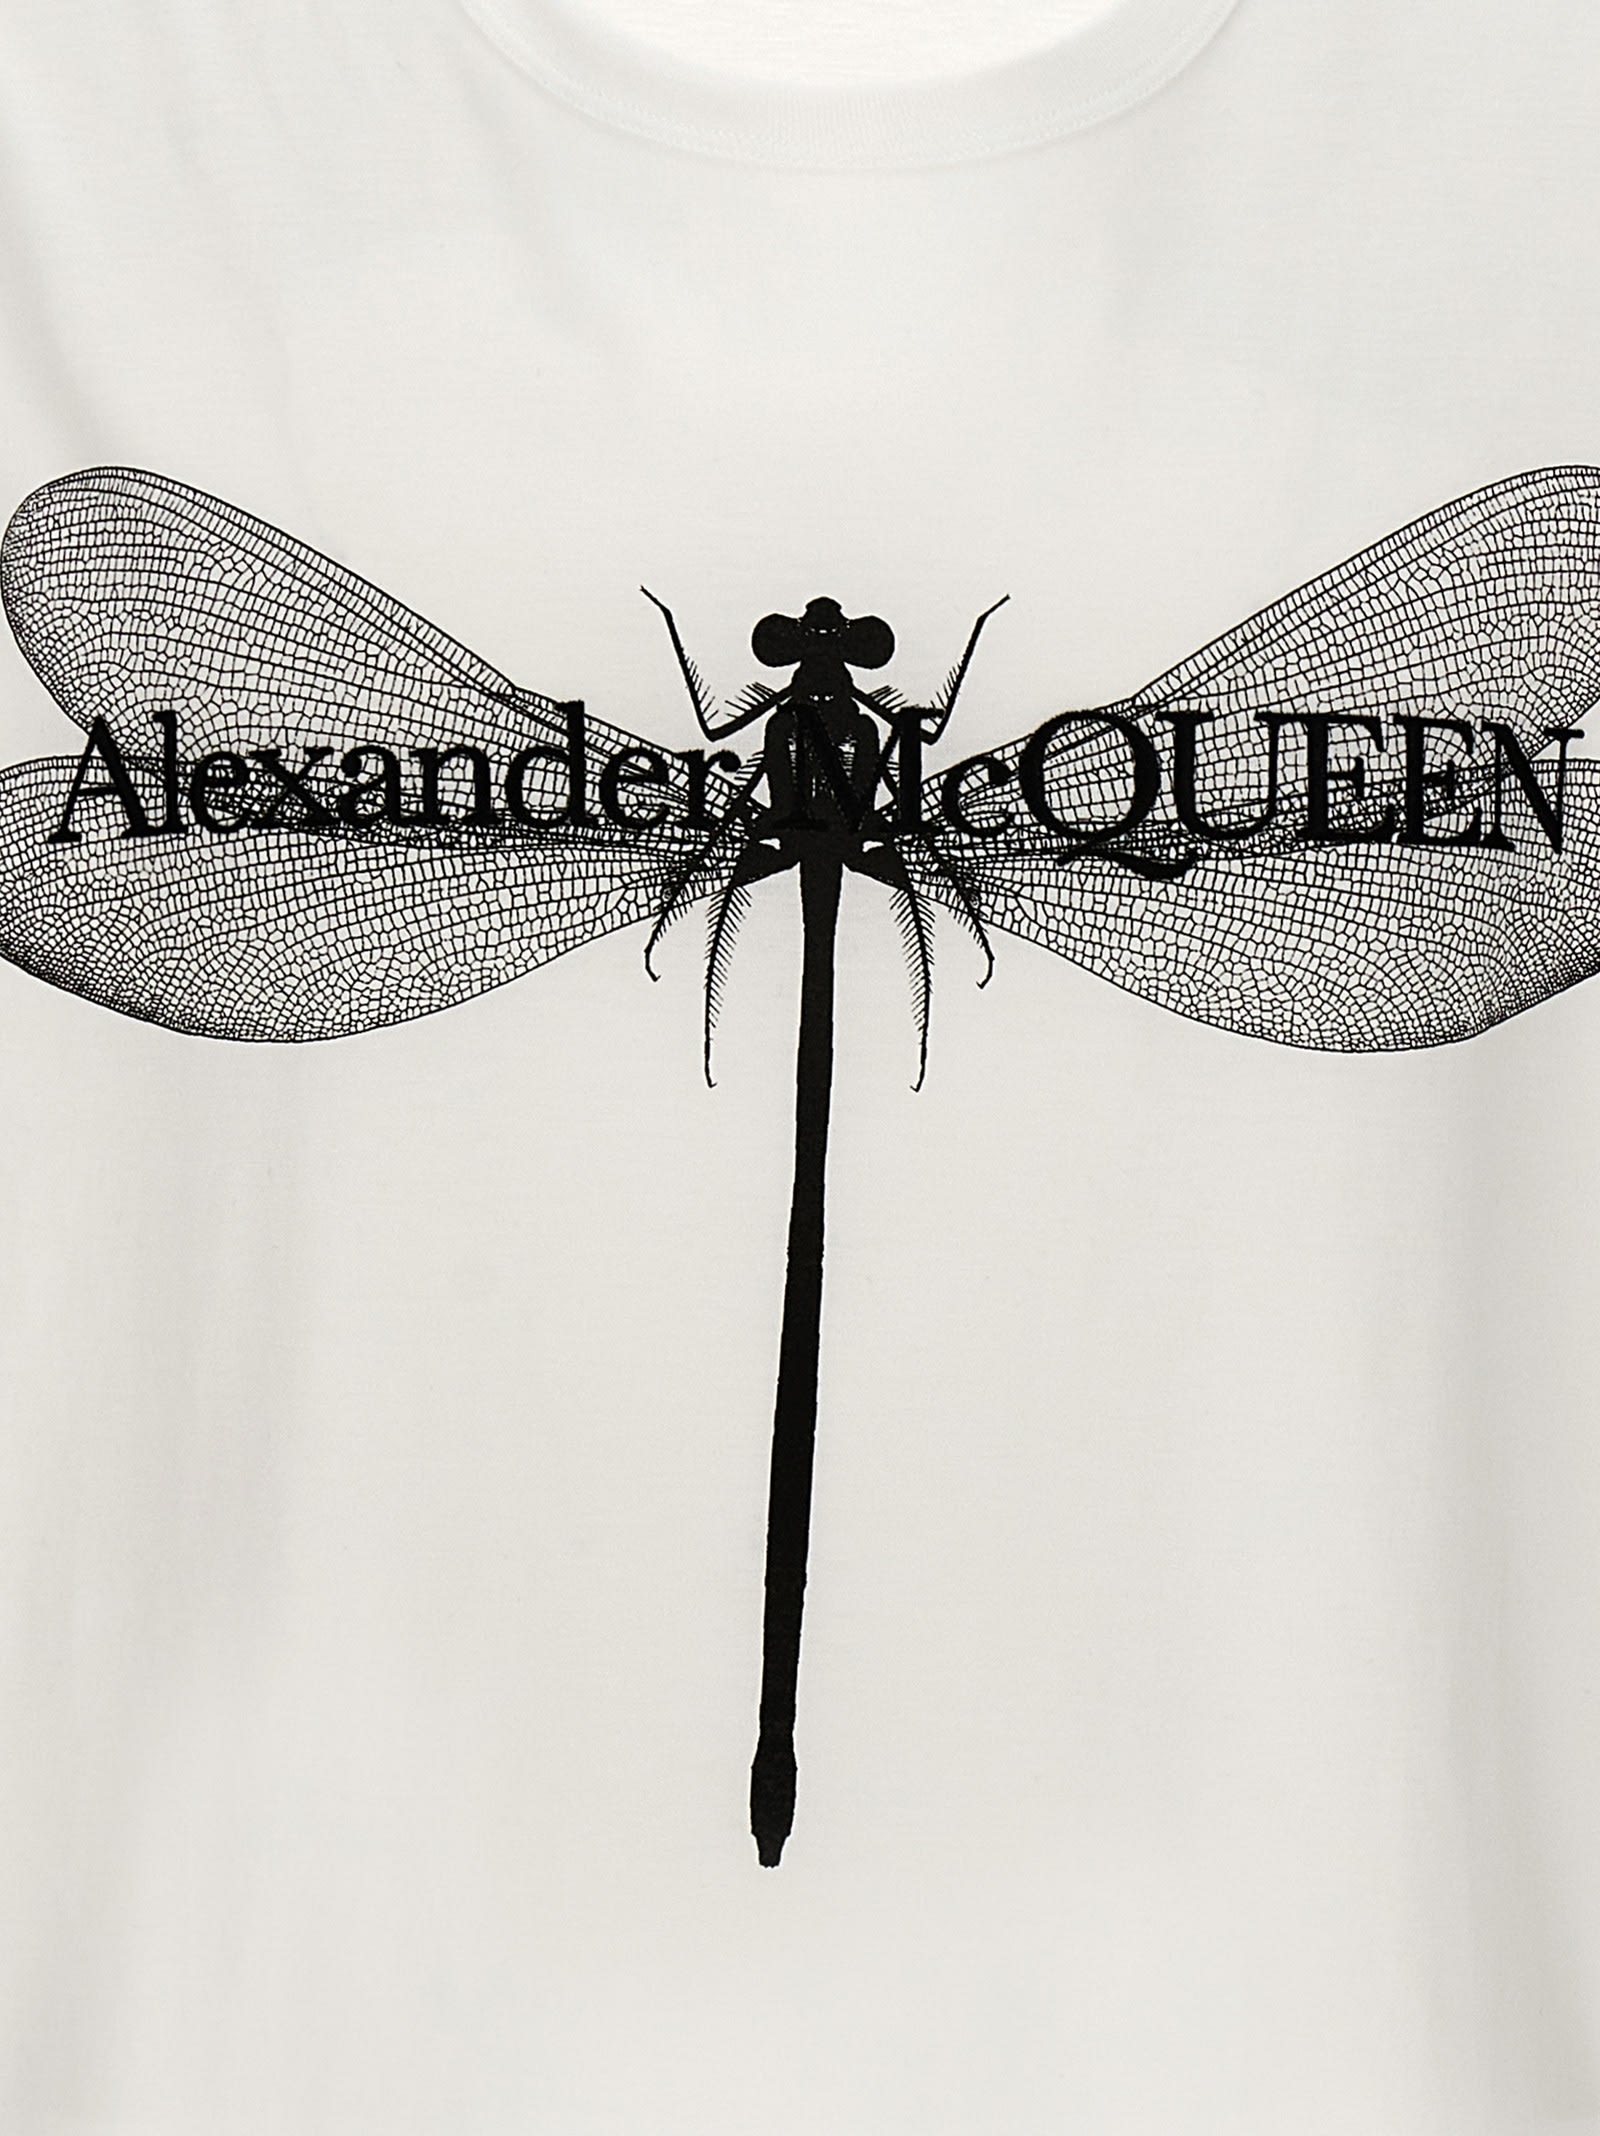 Shop Alexander Mcqueen Logo T-shirt In White/black